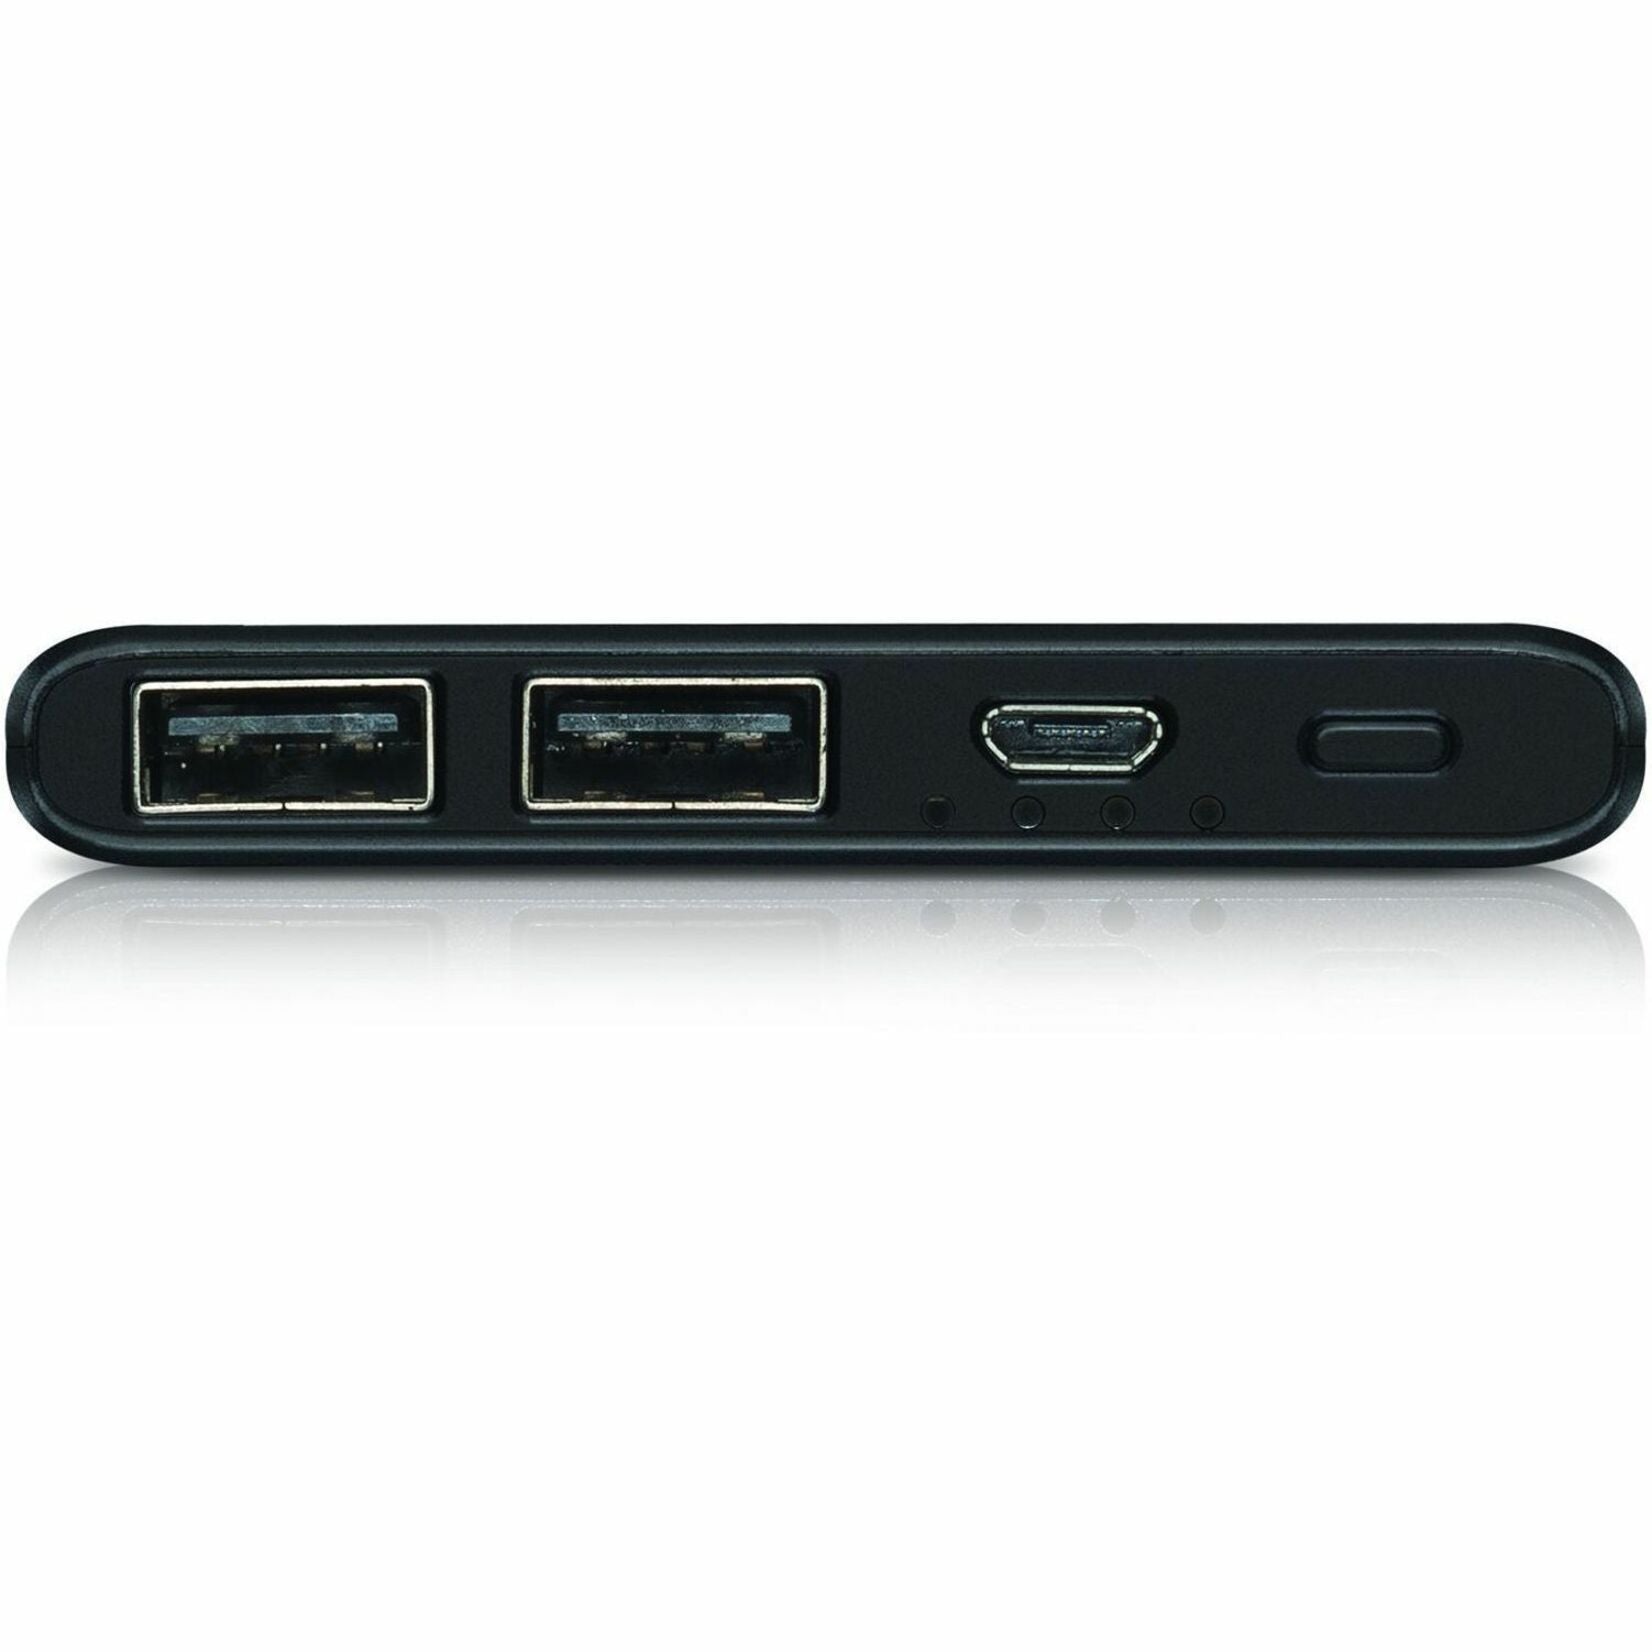 iStore APB055CAI Dual USB Power Bank, 5000mAh, 2.4A Output